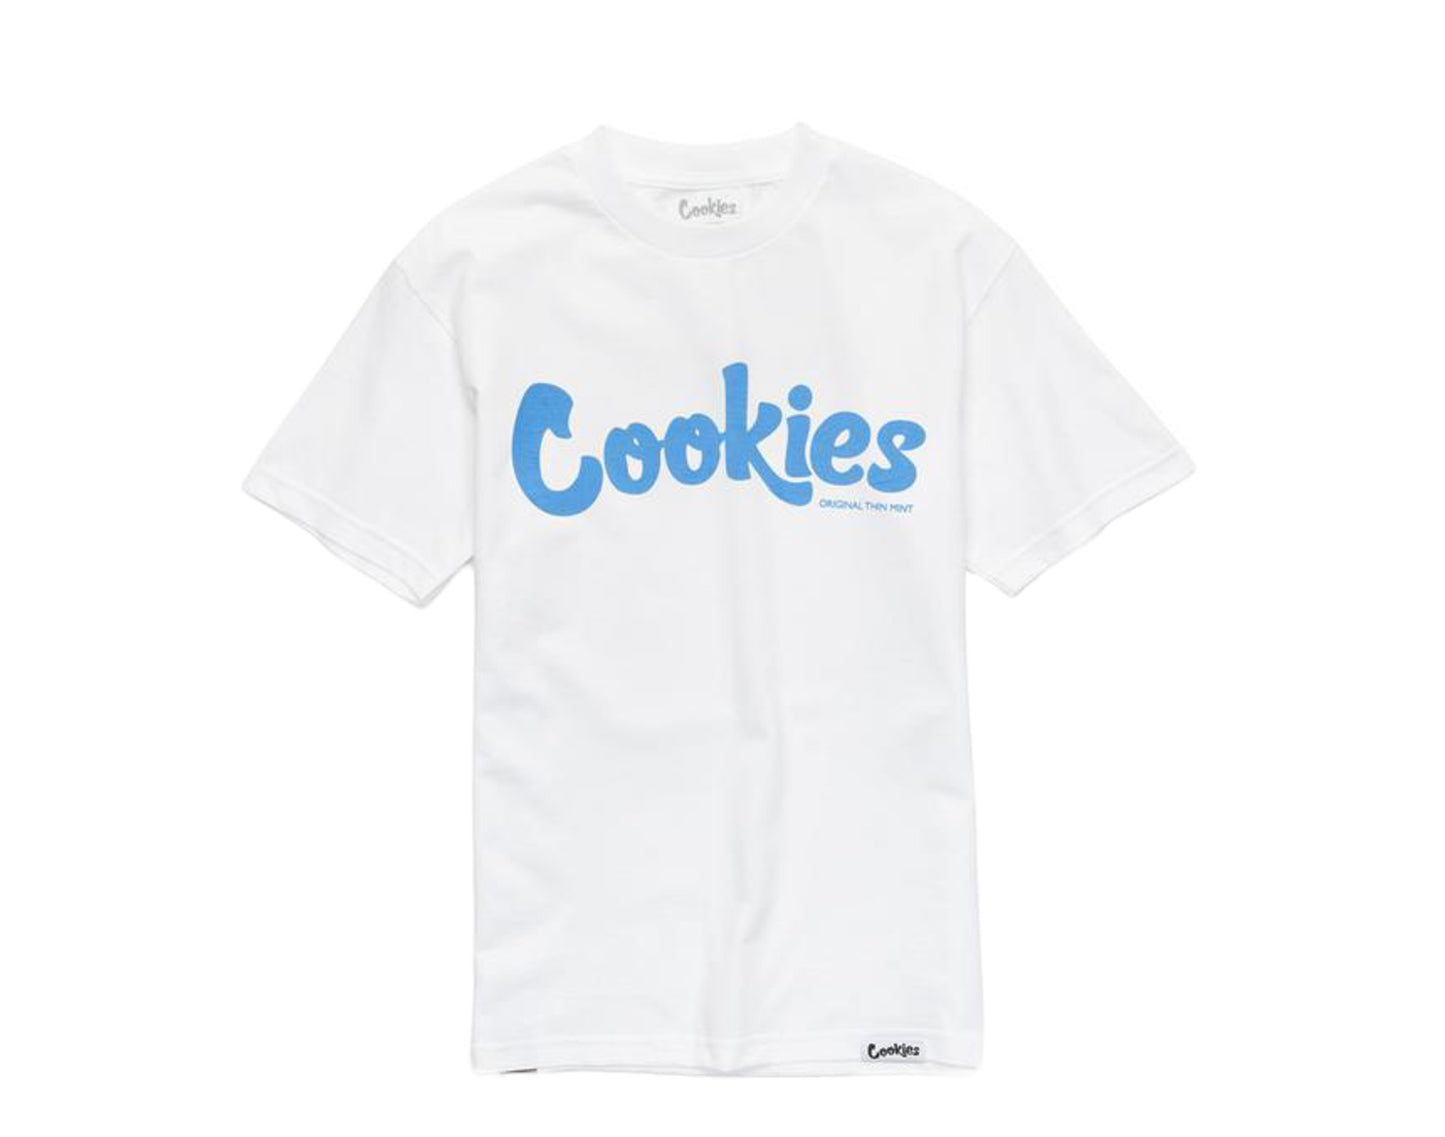 Cookies Original Logo Thin Mint White/Blue Men's Tee Shirt 1538T3500-WCB